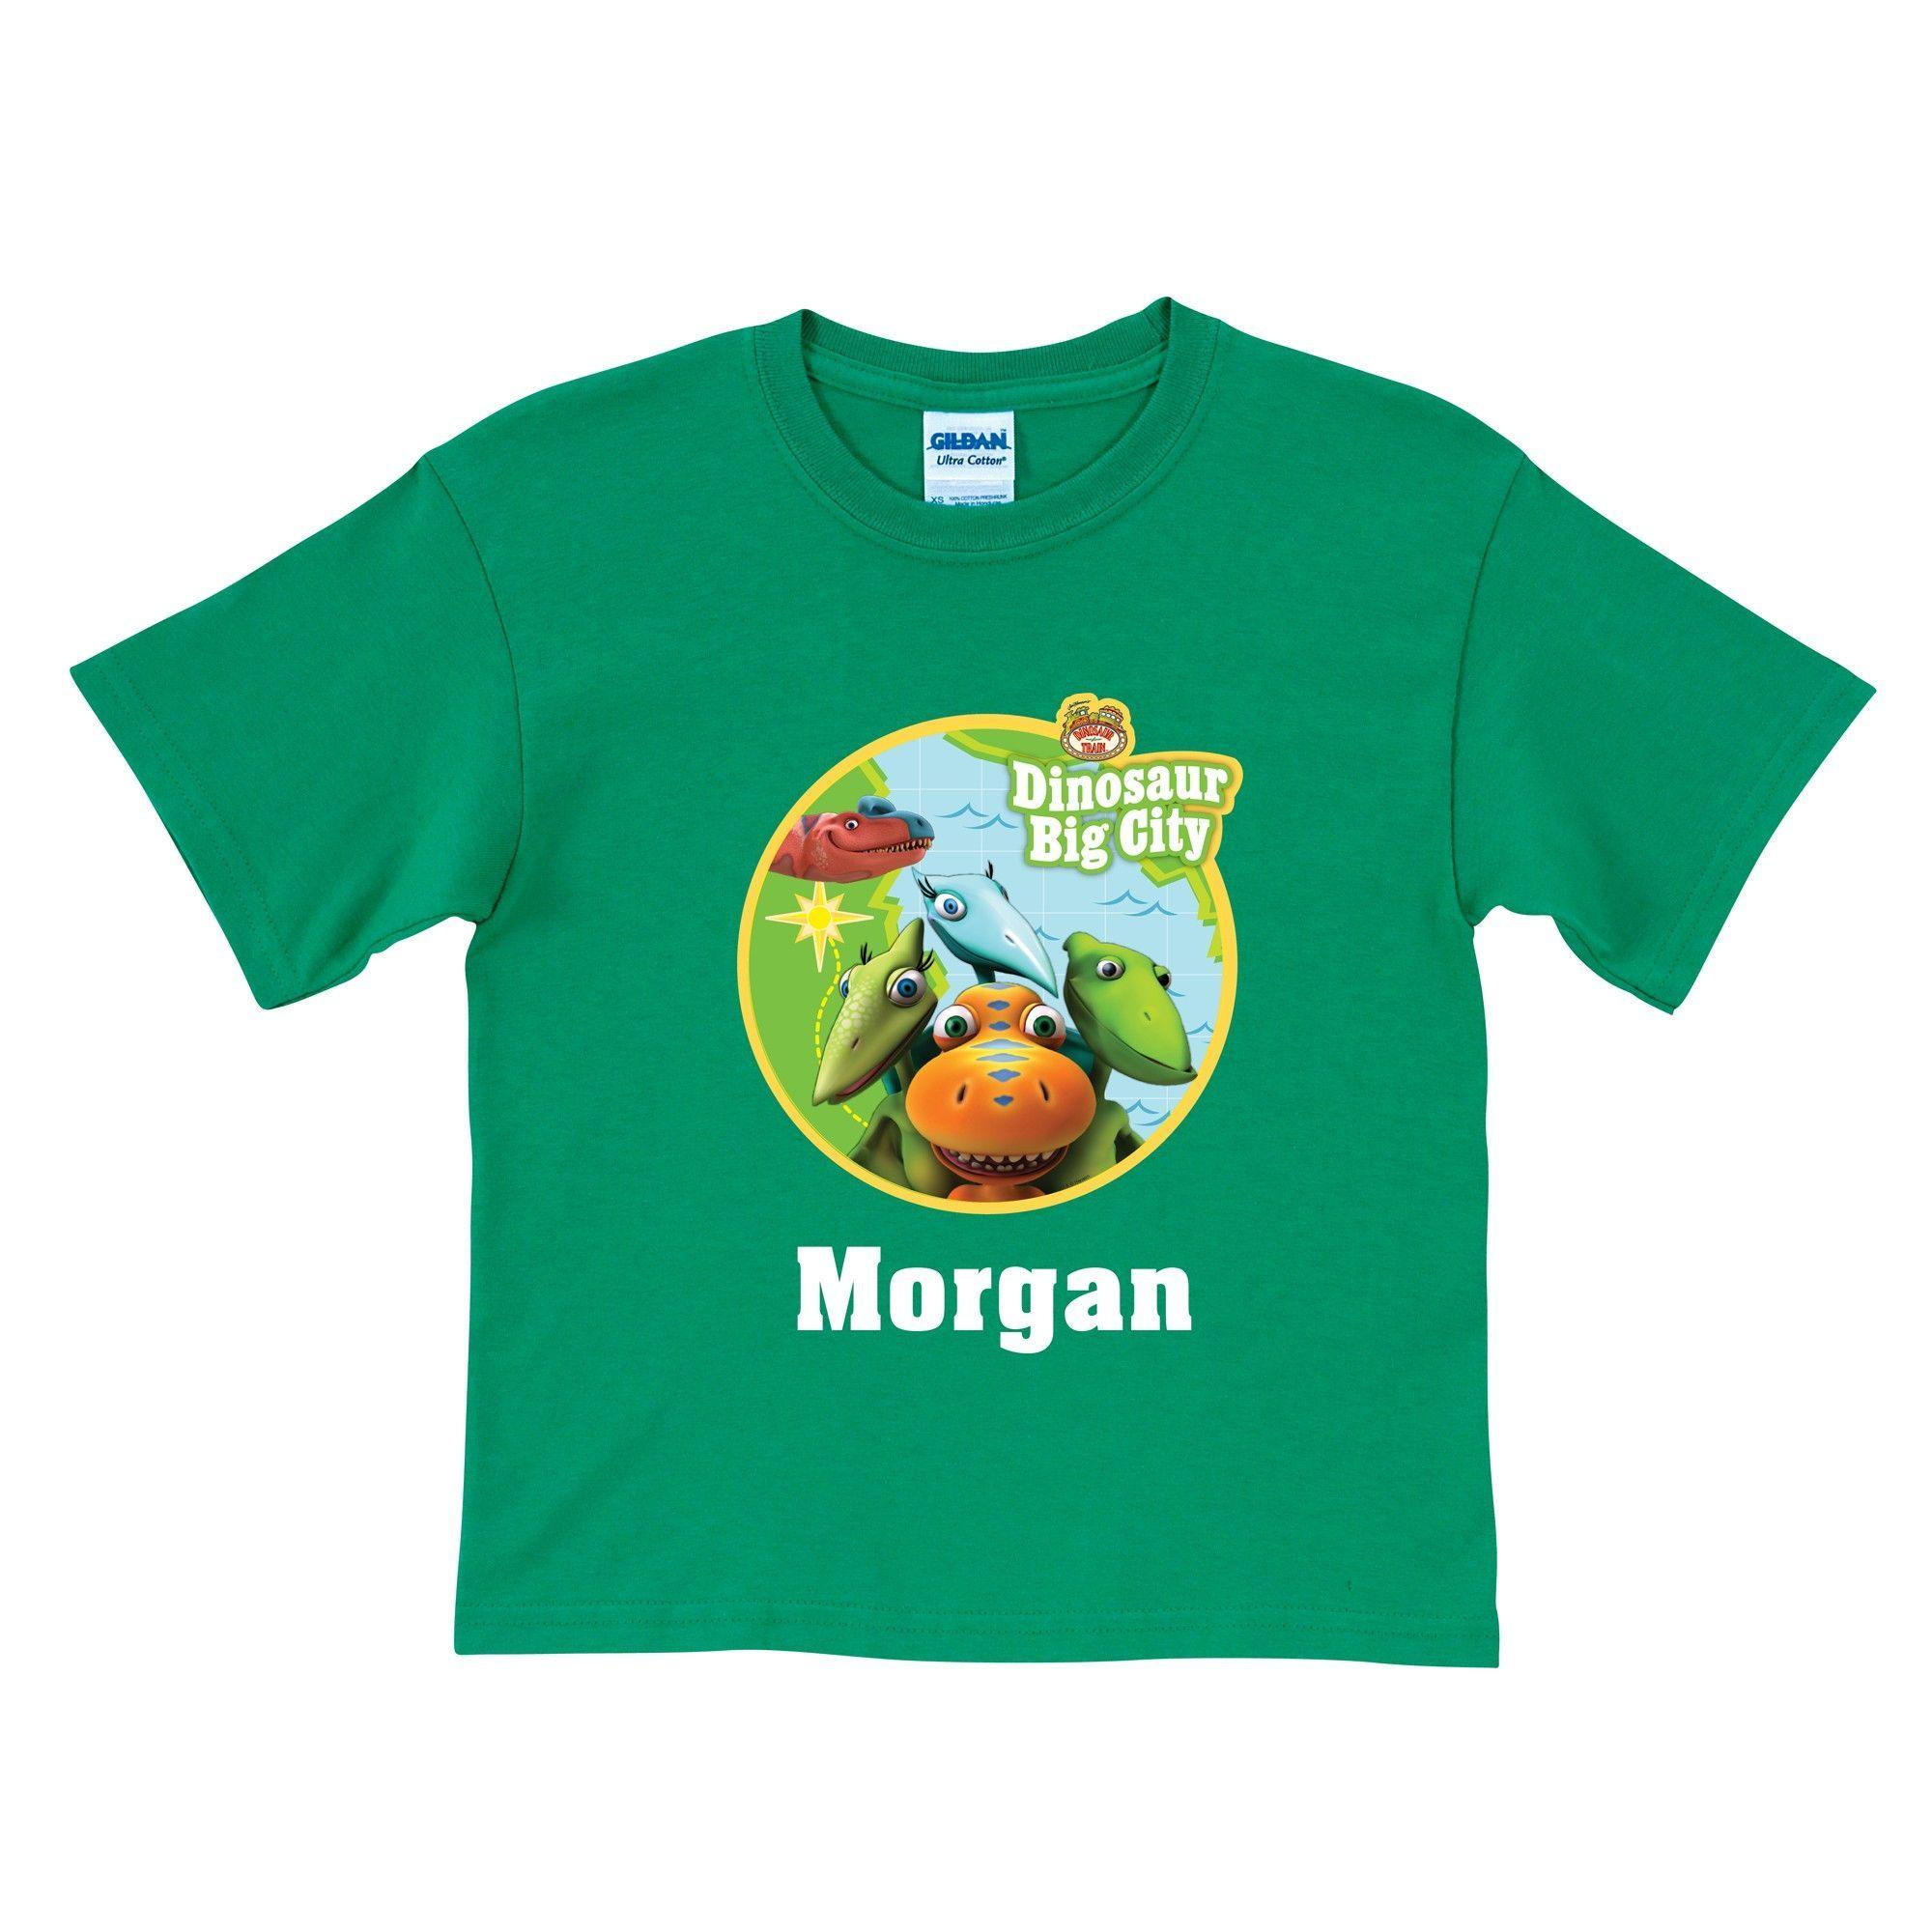 Green Dinosaur Shops Logo - Dinosaur Train Big City Adventure Green T-Shirt from PBS Kids Shop ...